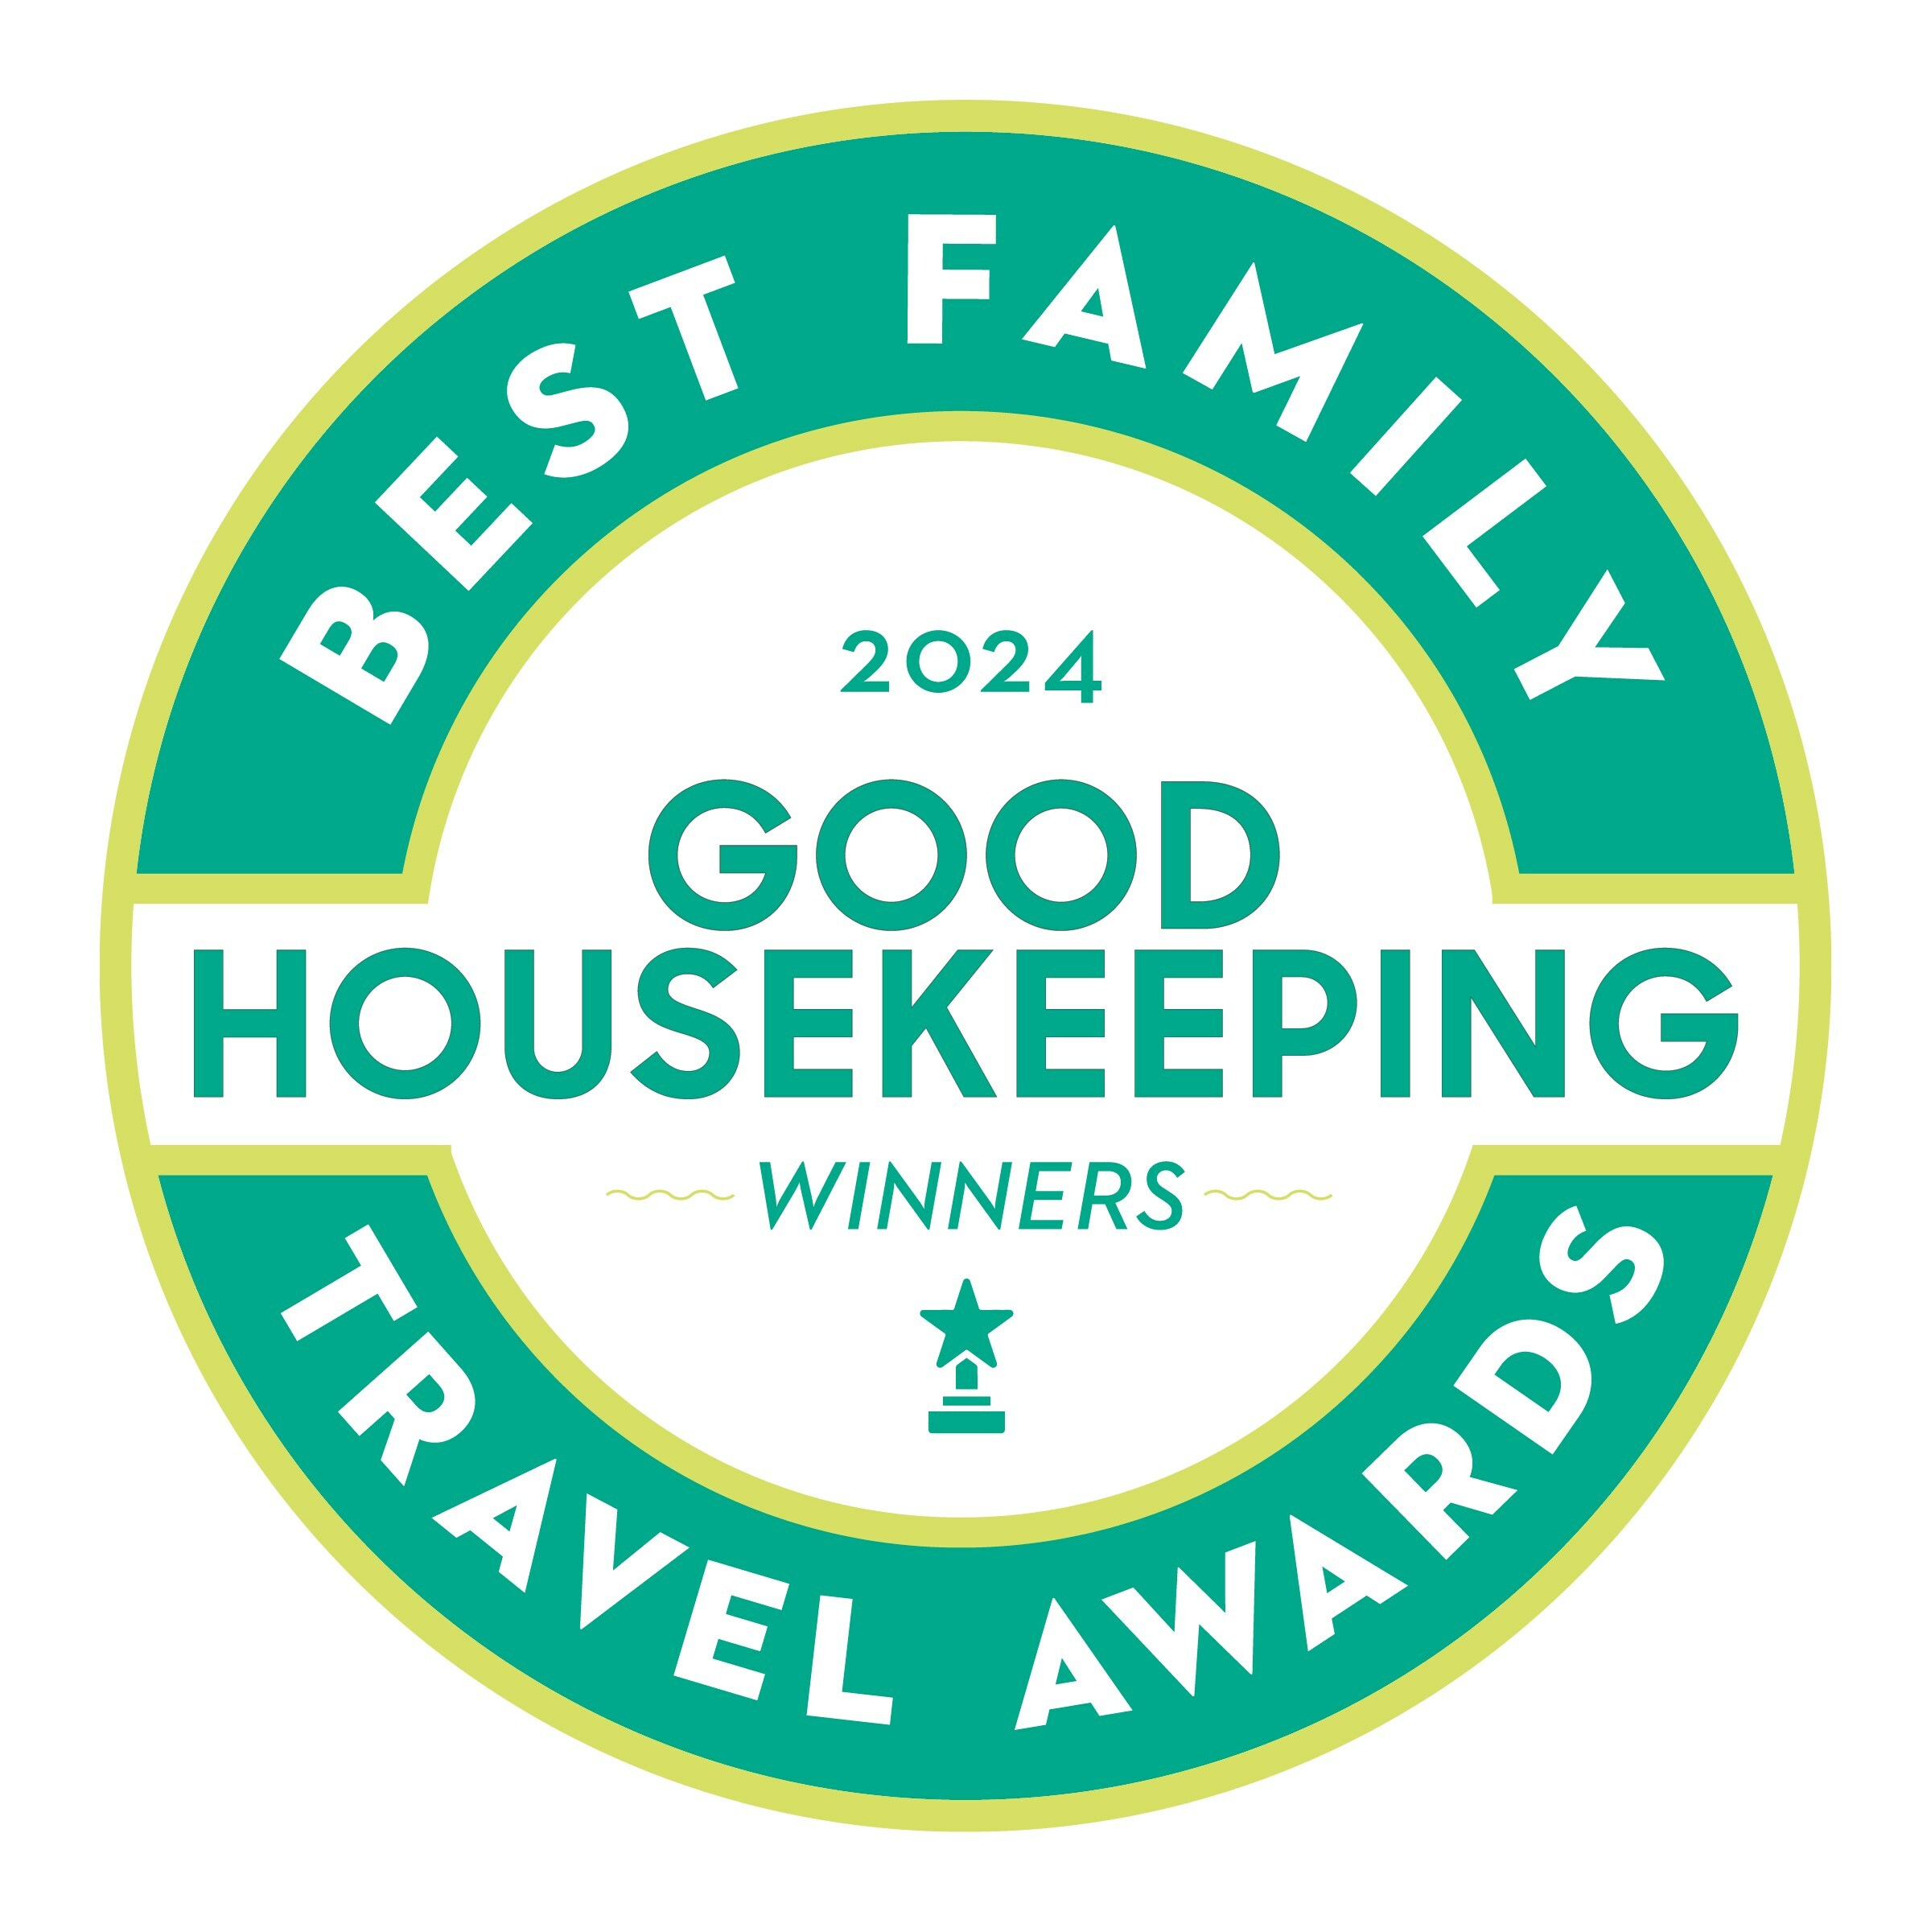 Majestic Princess Wins Good Housekeeping 2024 Family Travel Award